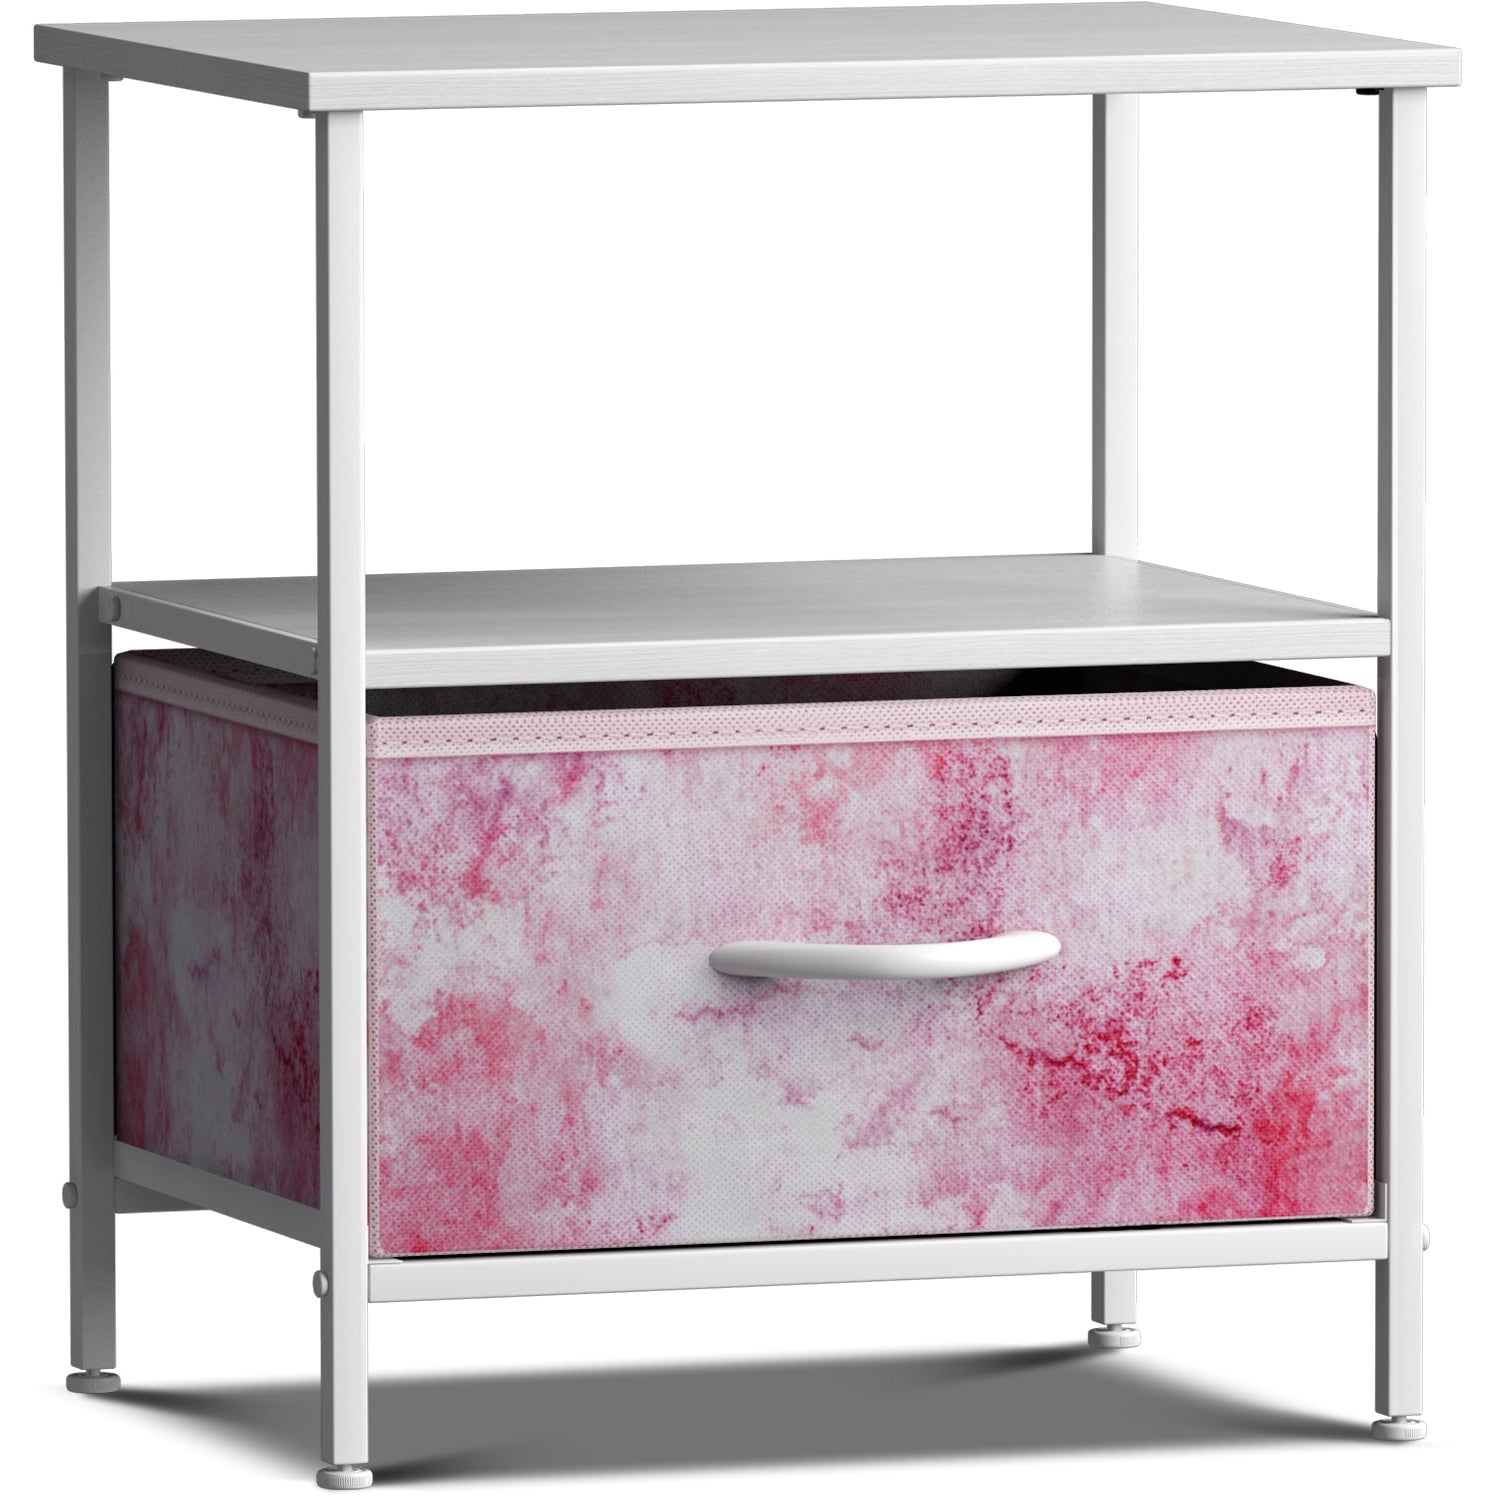 1-Drawer Shelf Table (Tie-dye Colors)